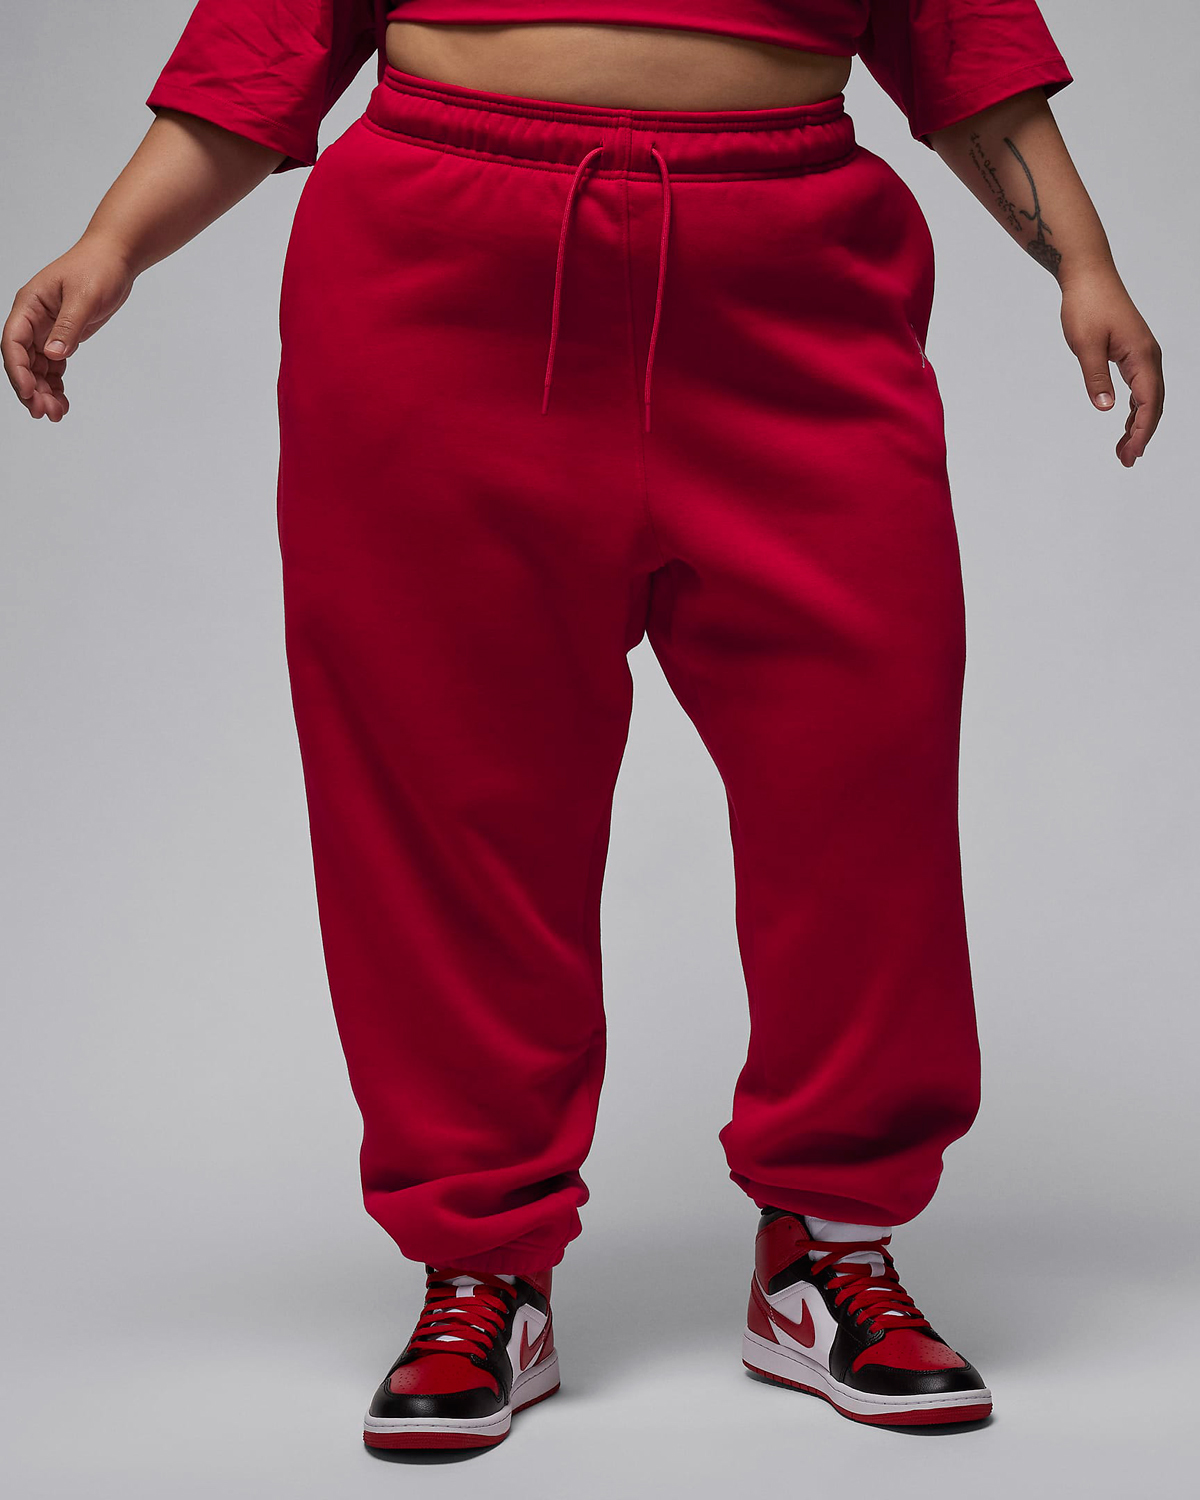 Jordan-Brooklyn-Fleece-Womens-Pants-Plus-Size-Gym-Red-1